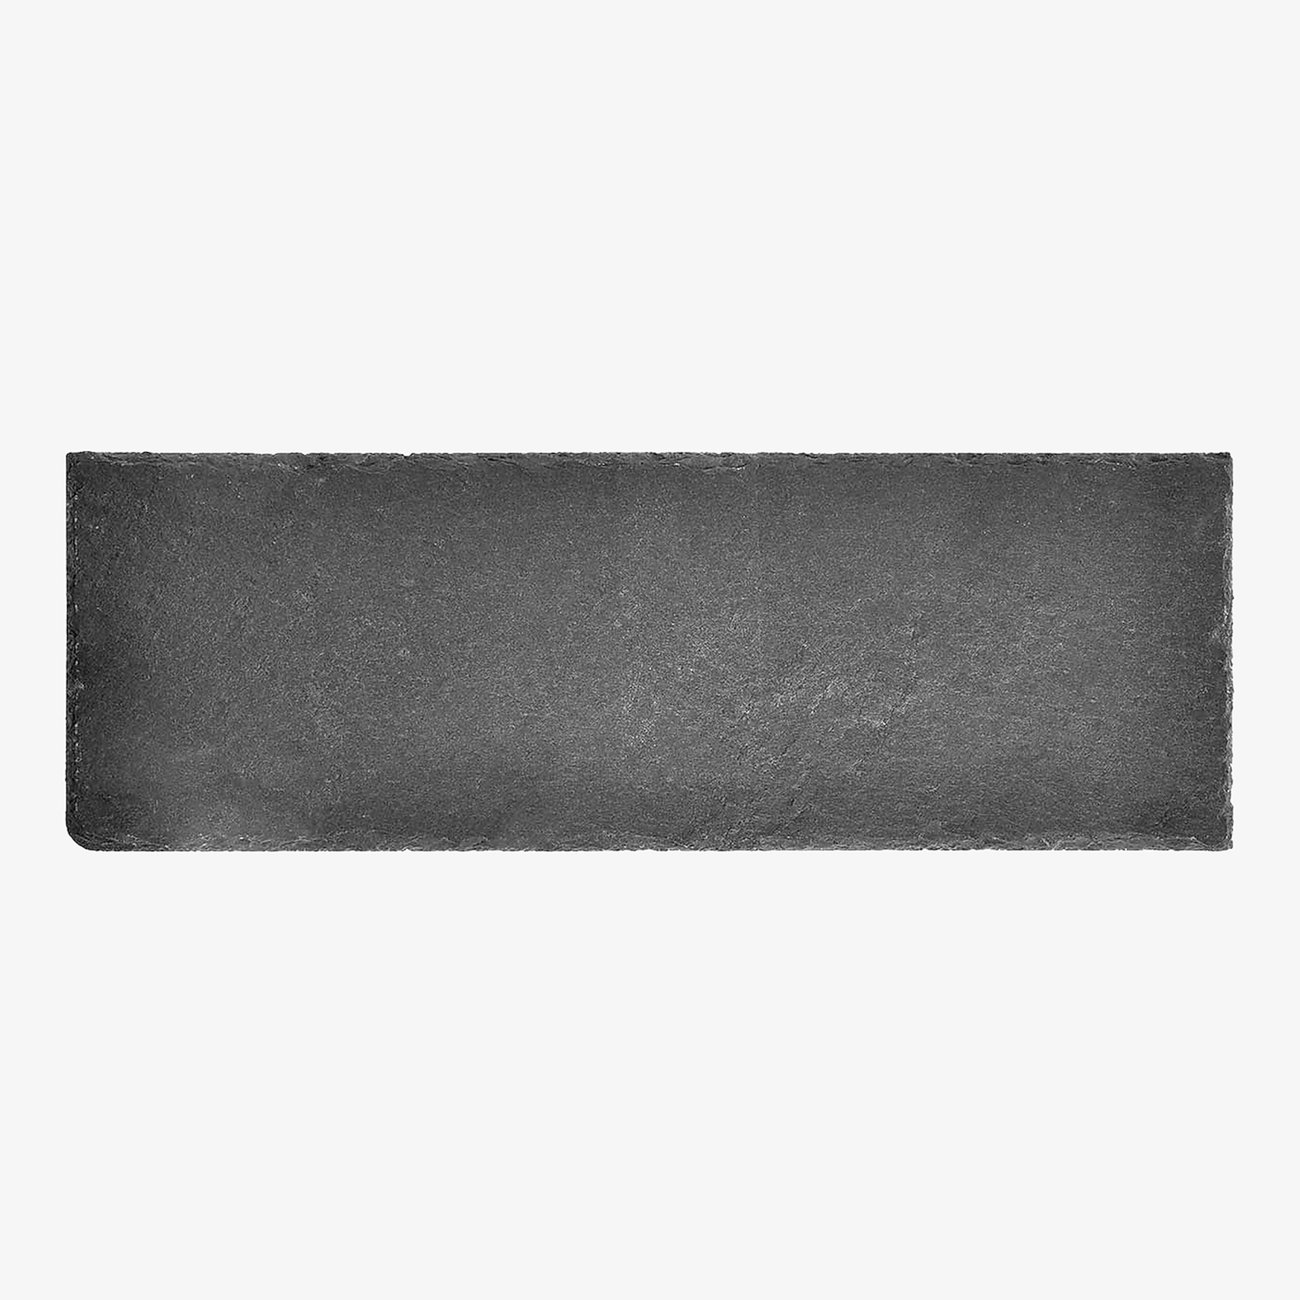 Schieferplatte, L:38cm x B:13cm, schwarz